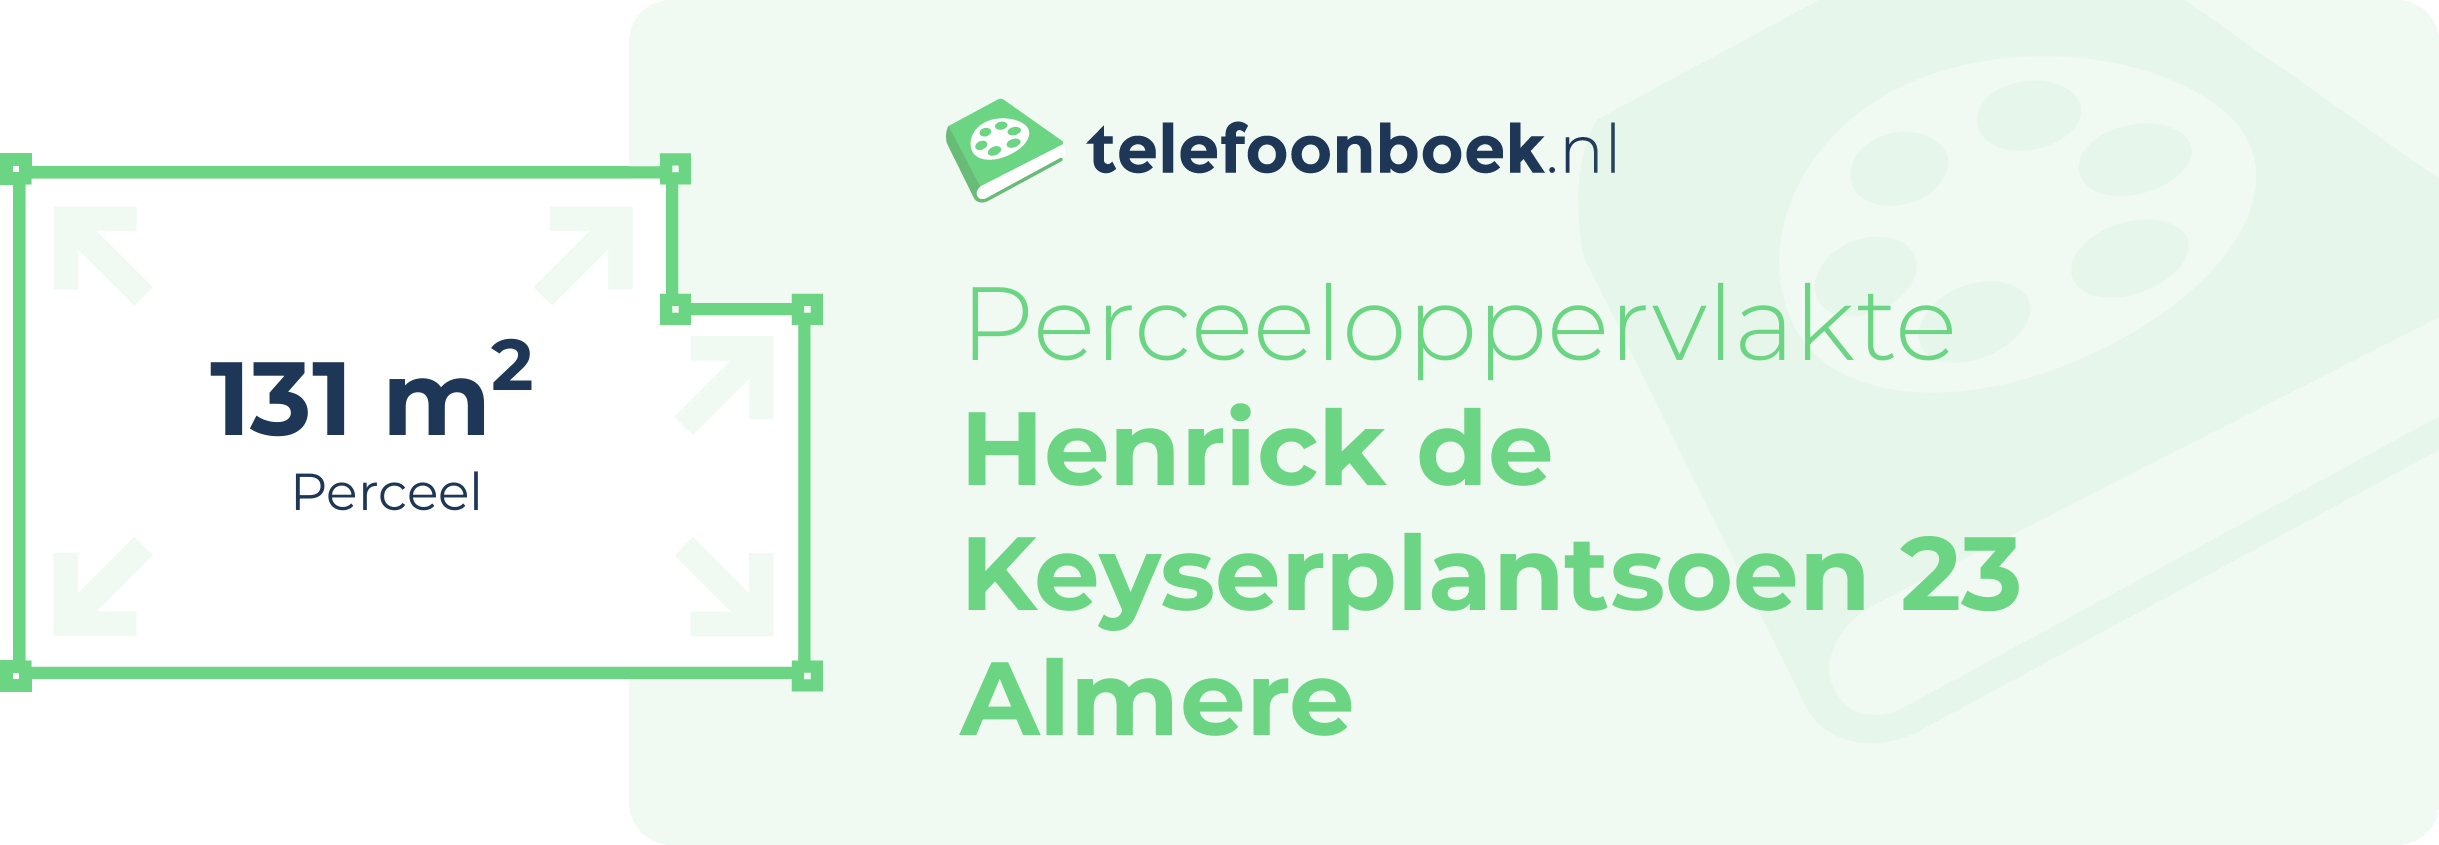 Perceeloppervlakte Henrick De Keyserplantsoen 23 Almere